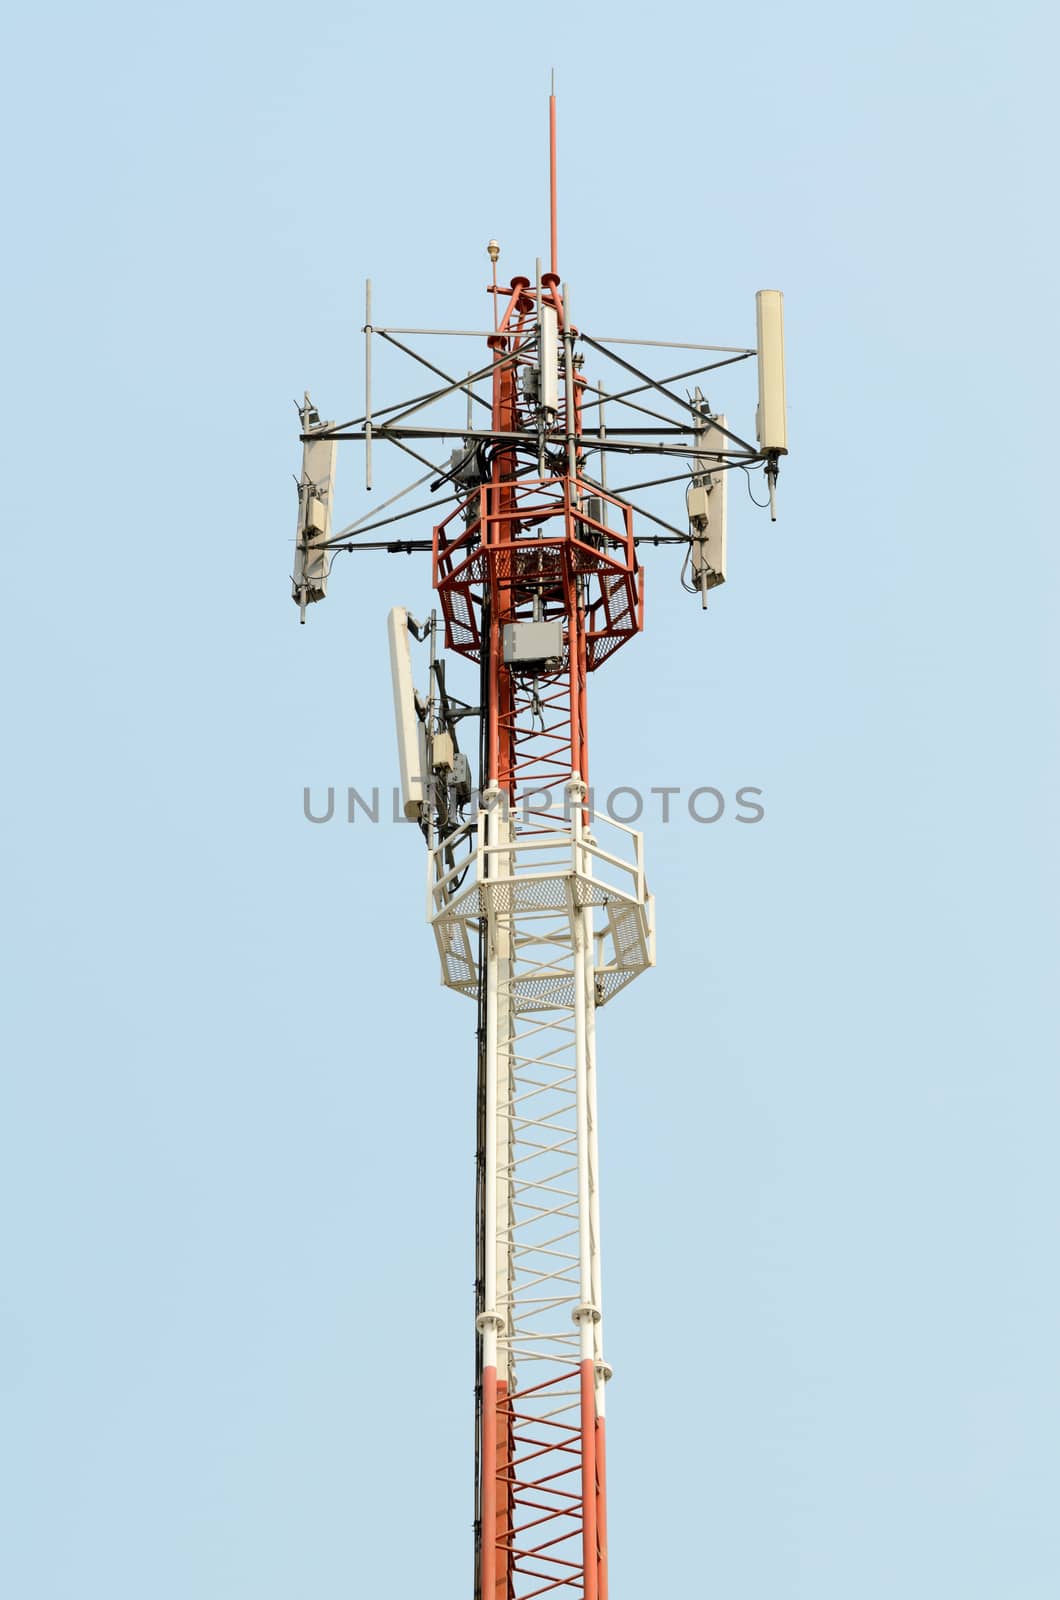 Antenna on the telecommunication tower